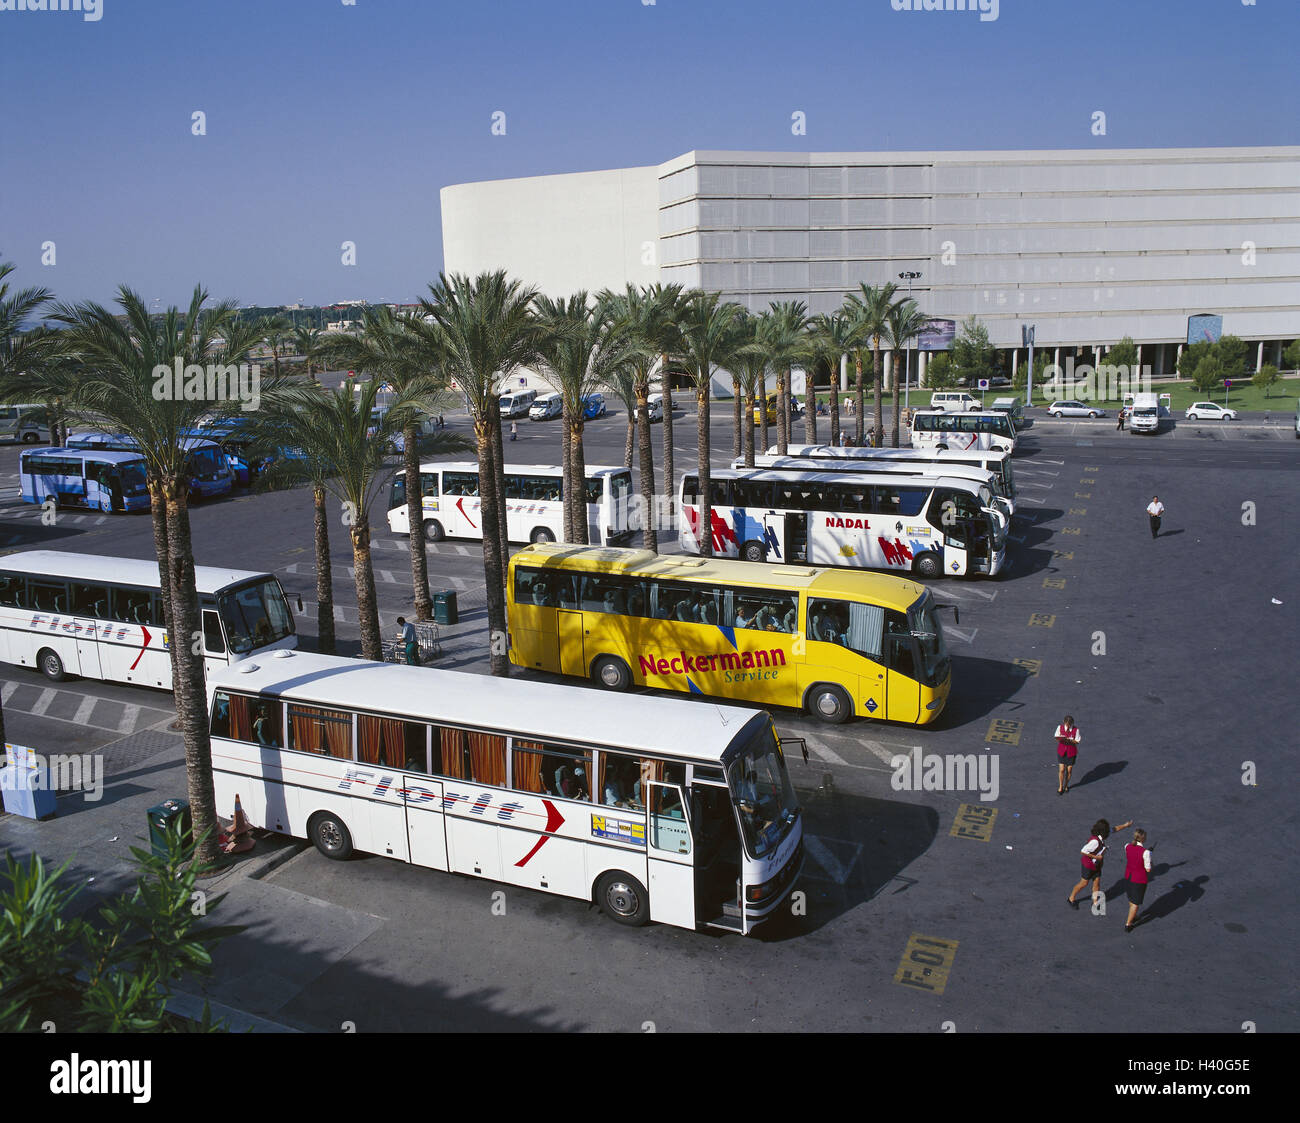 Airport parking buses fotografías e imágenes de alta resolución - Alamy